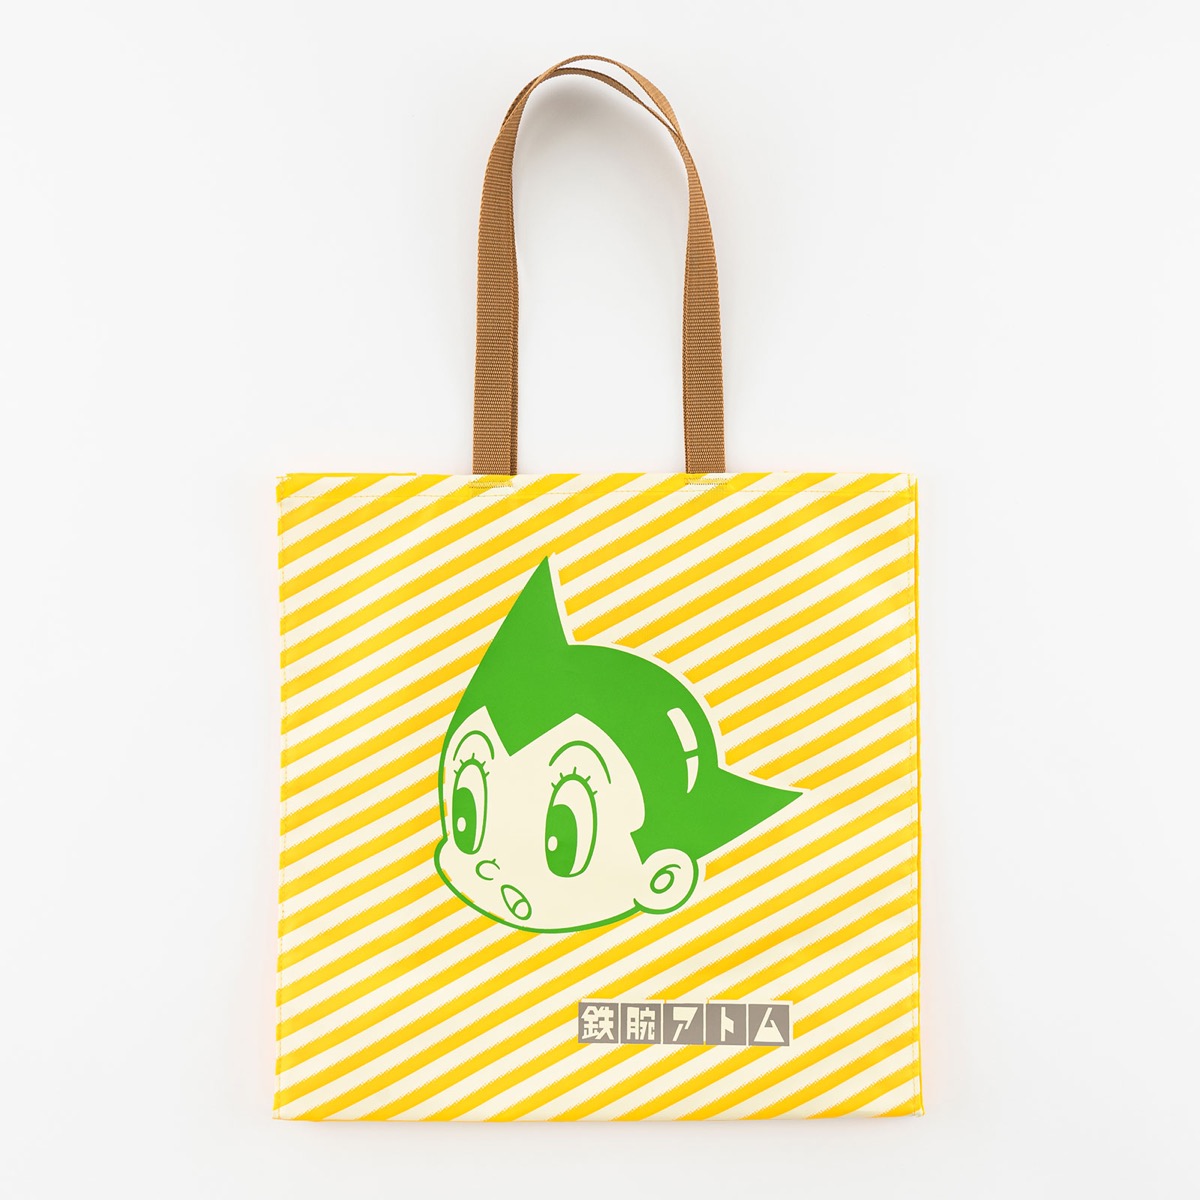 Hobonichi / Astro Boy: Everlasting “Paper” Bag - Accessories Lineup